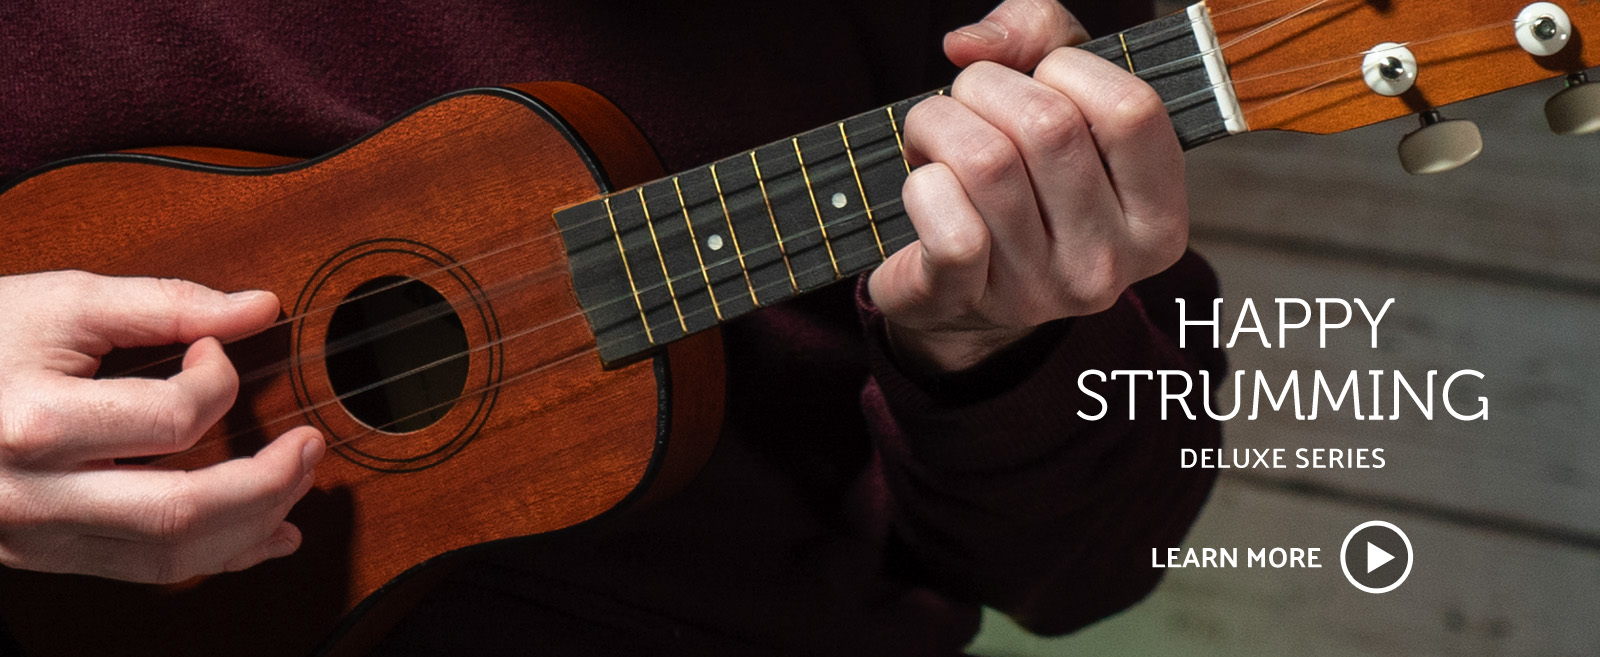 closeup of man's hands playing ukulele